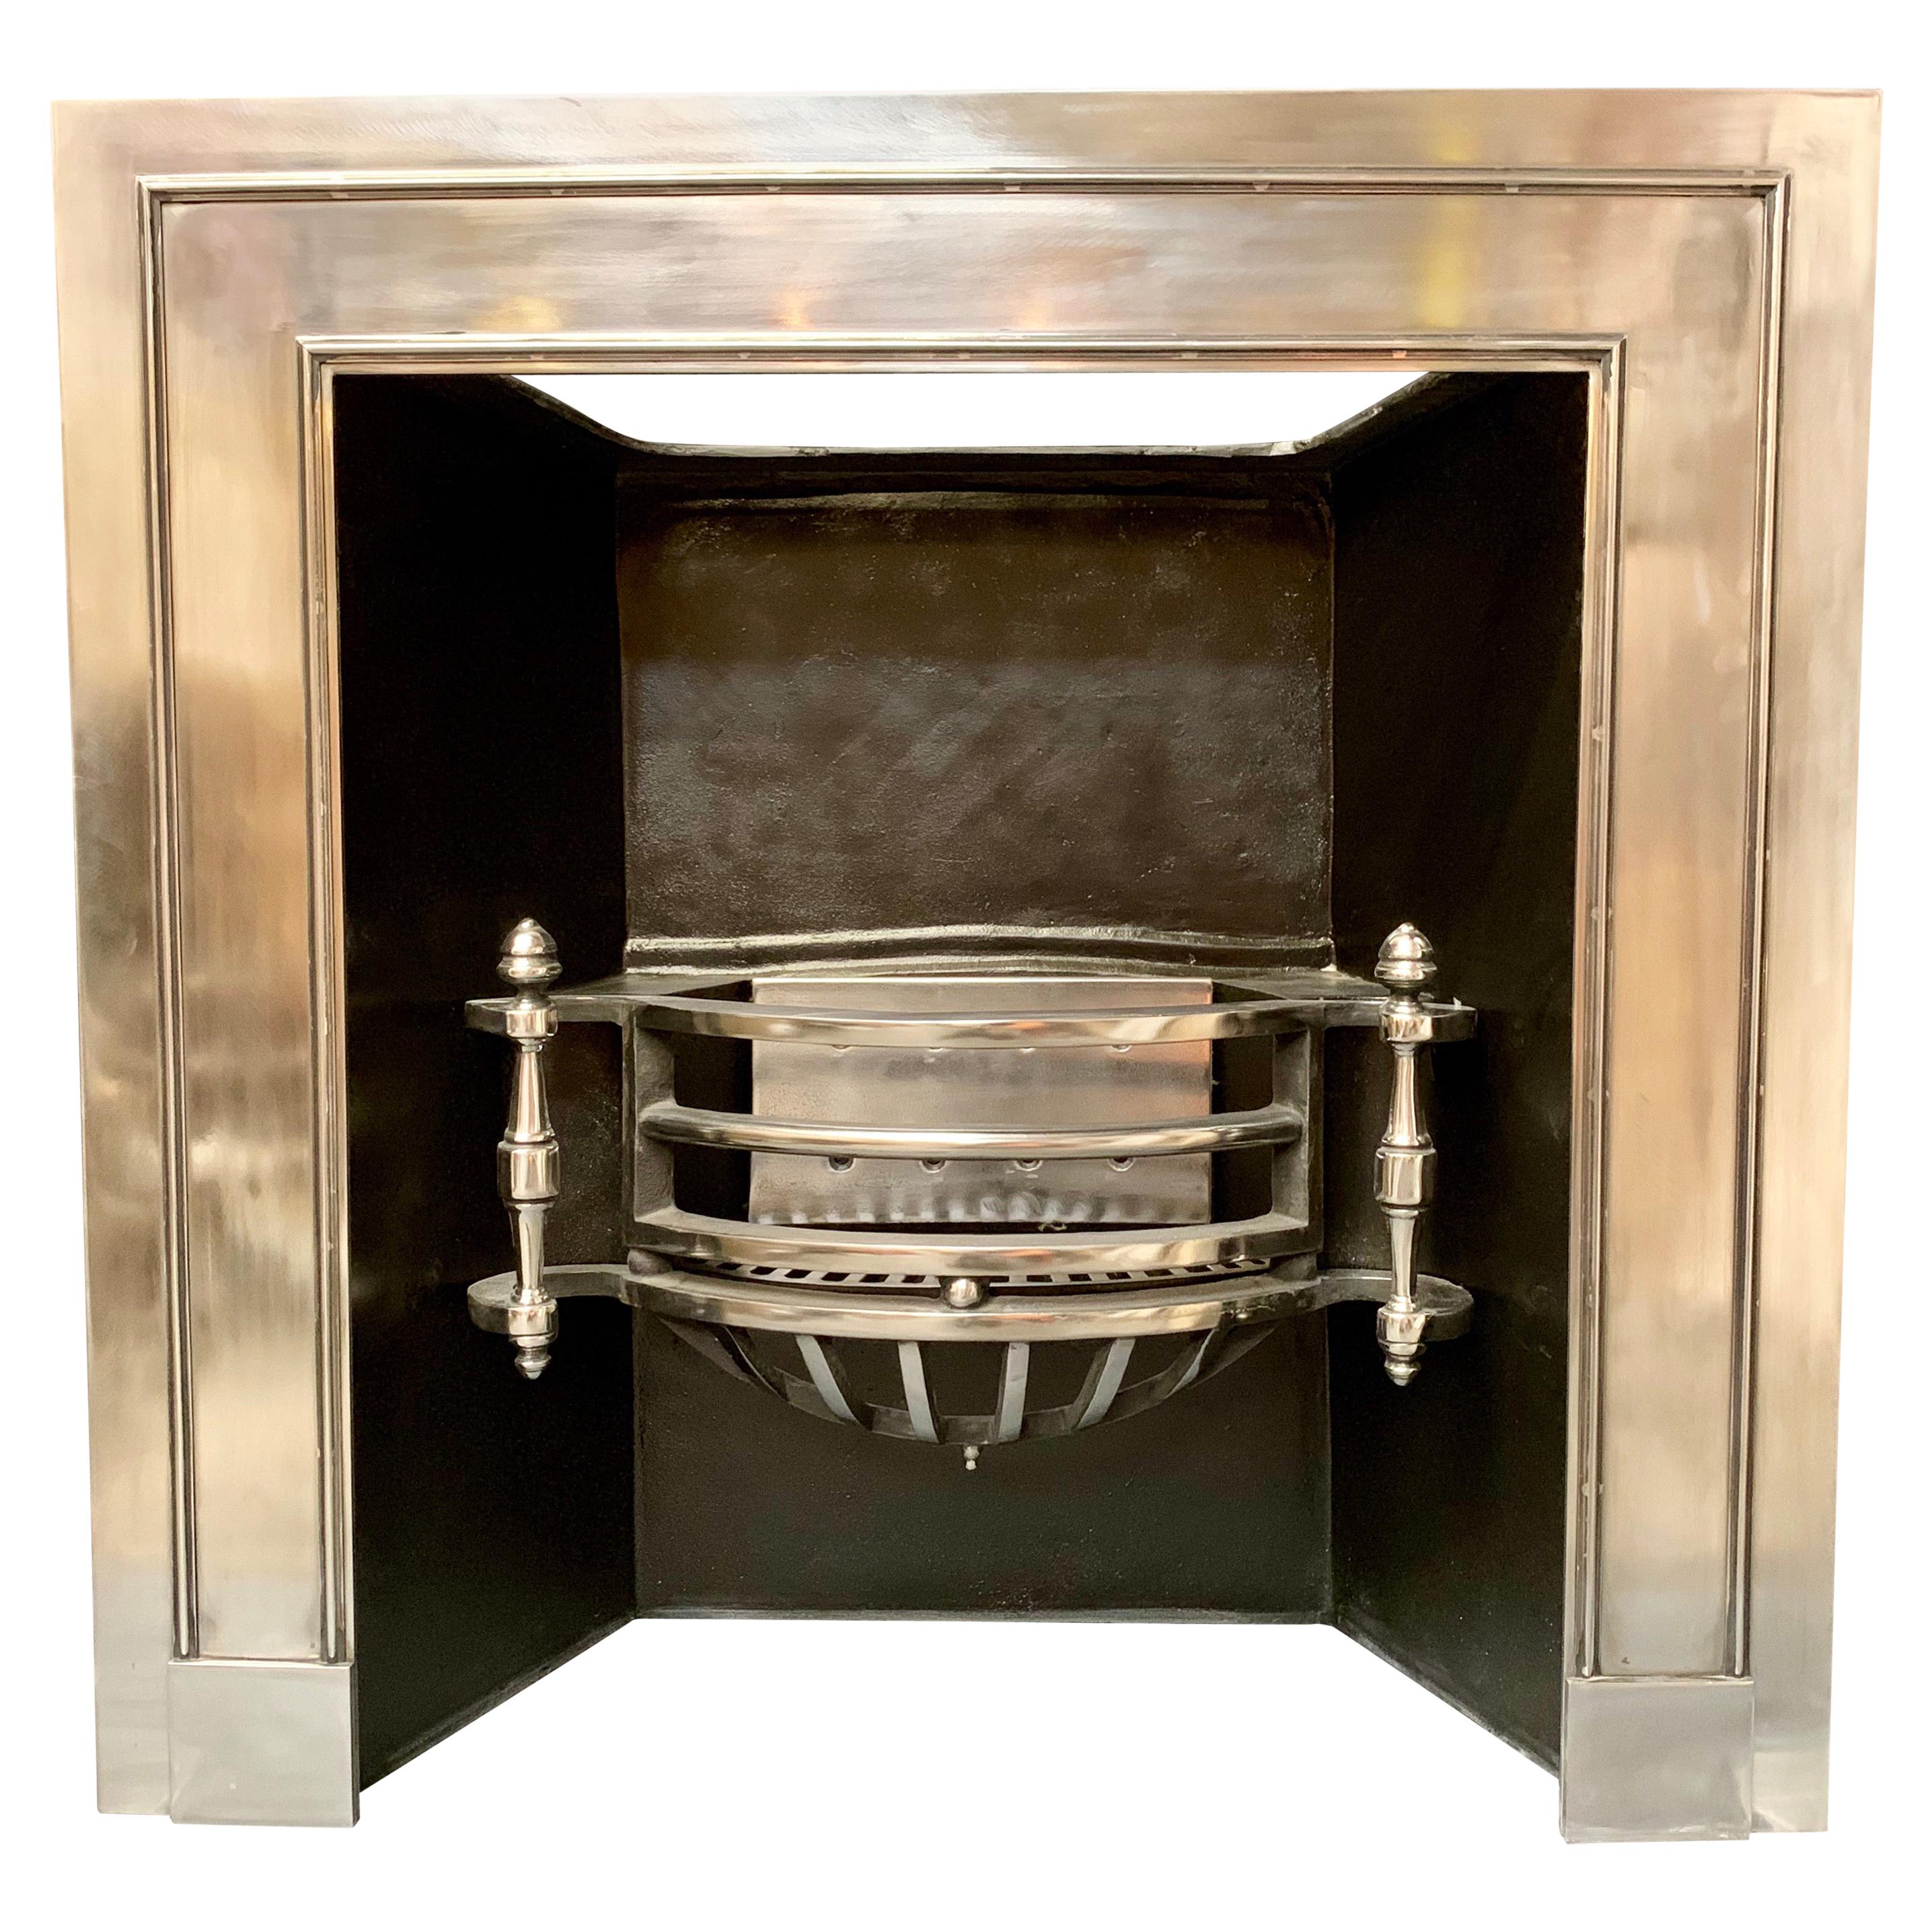 Large 19th Century Regency Style Polished Steel Fireplace Insert